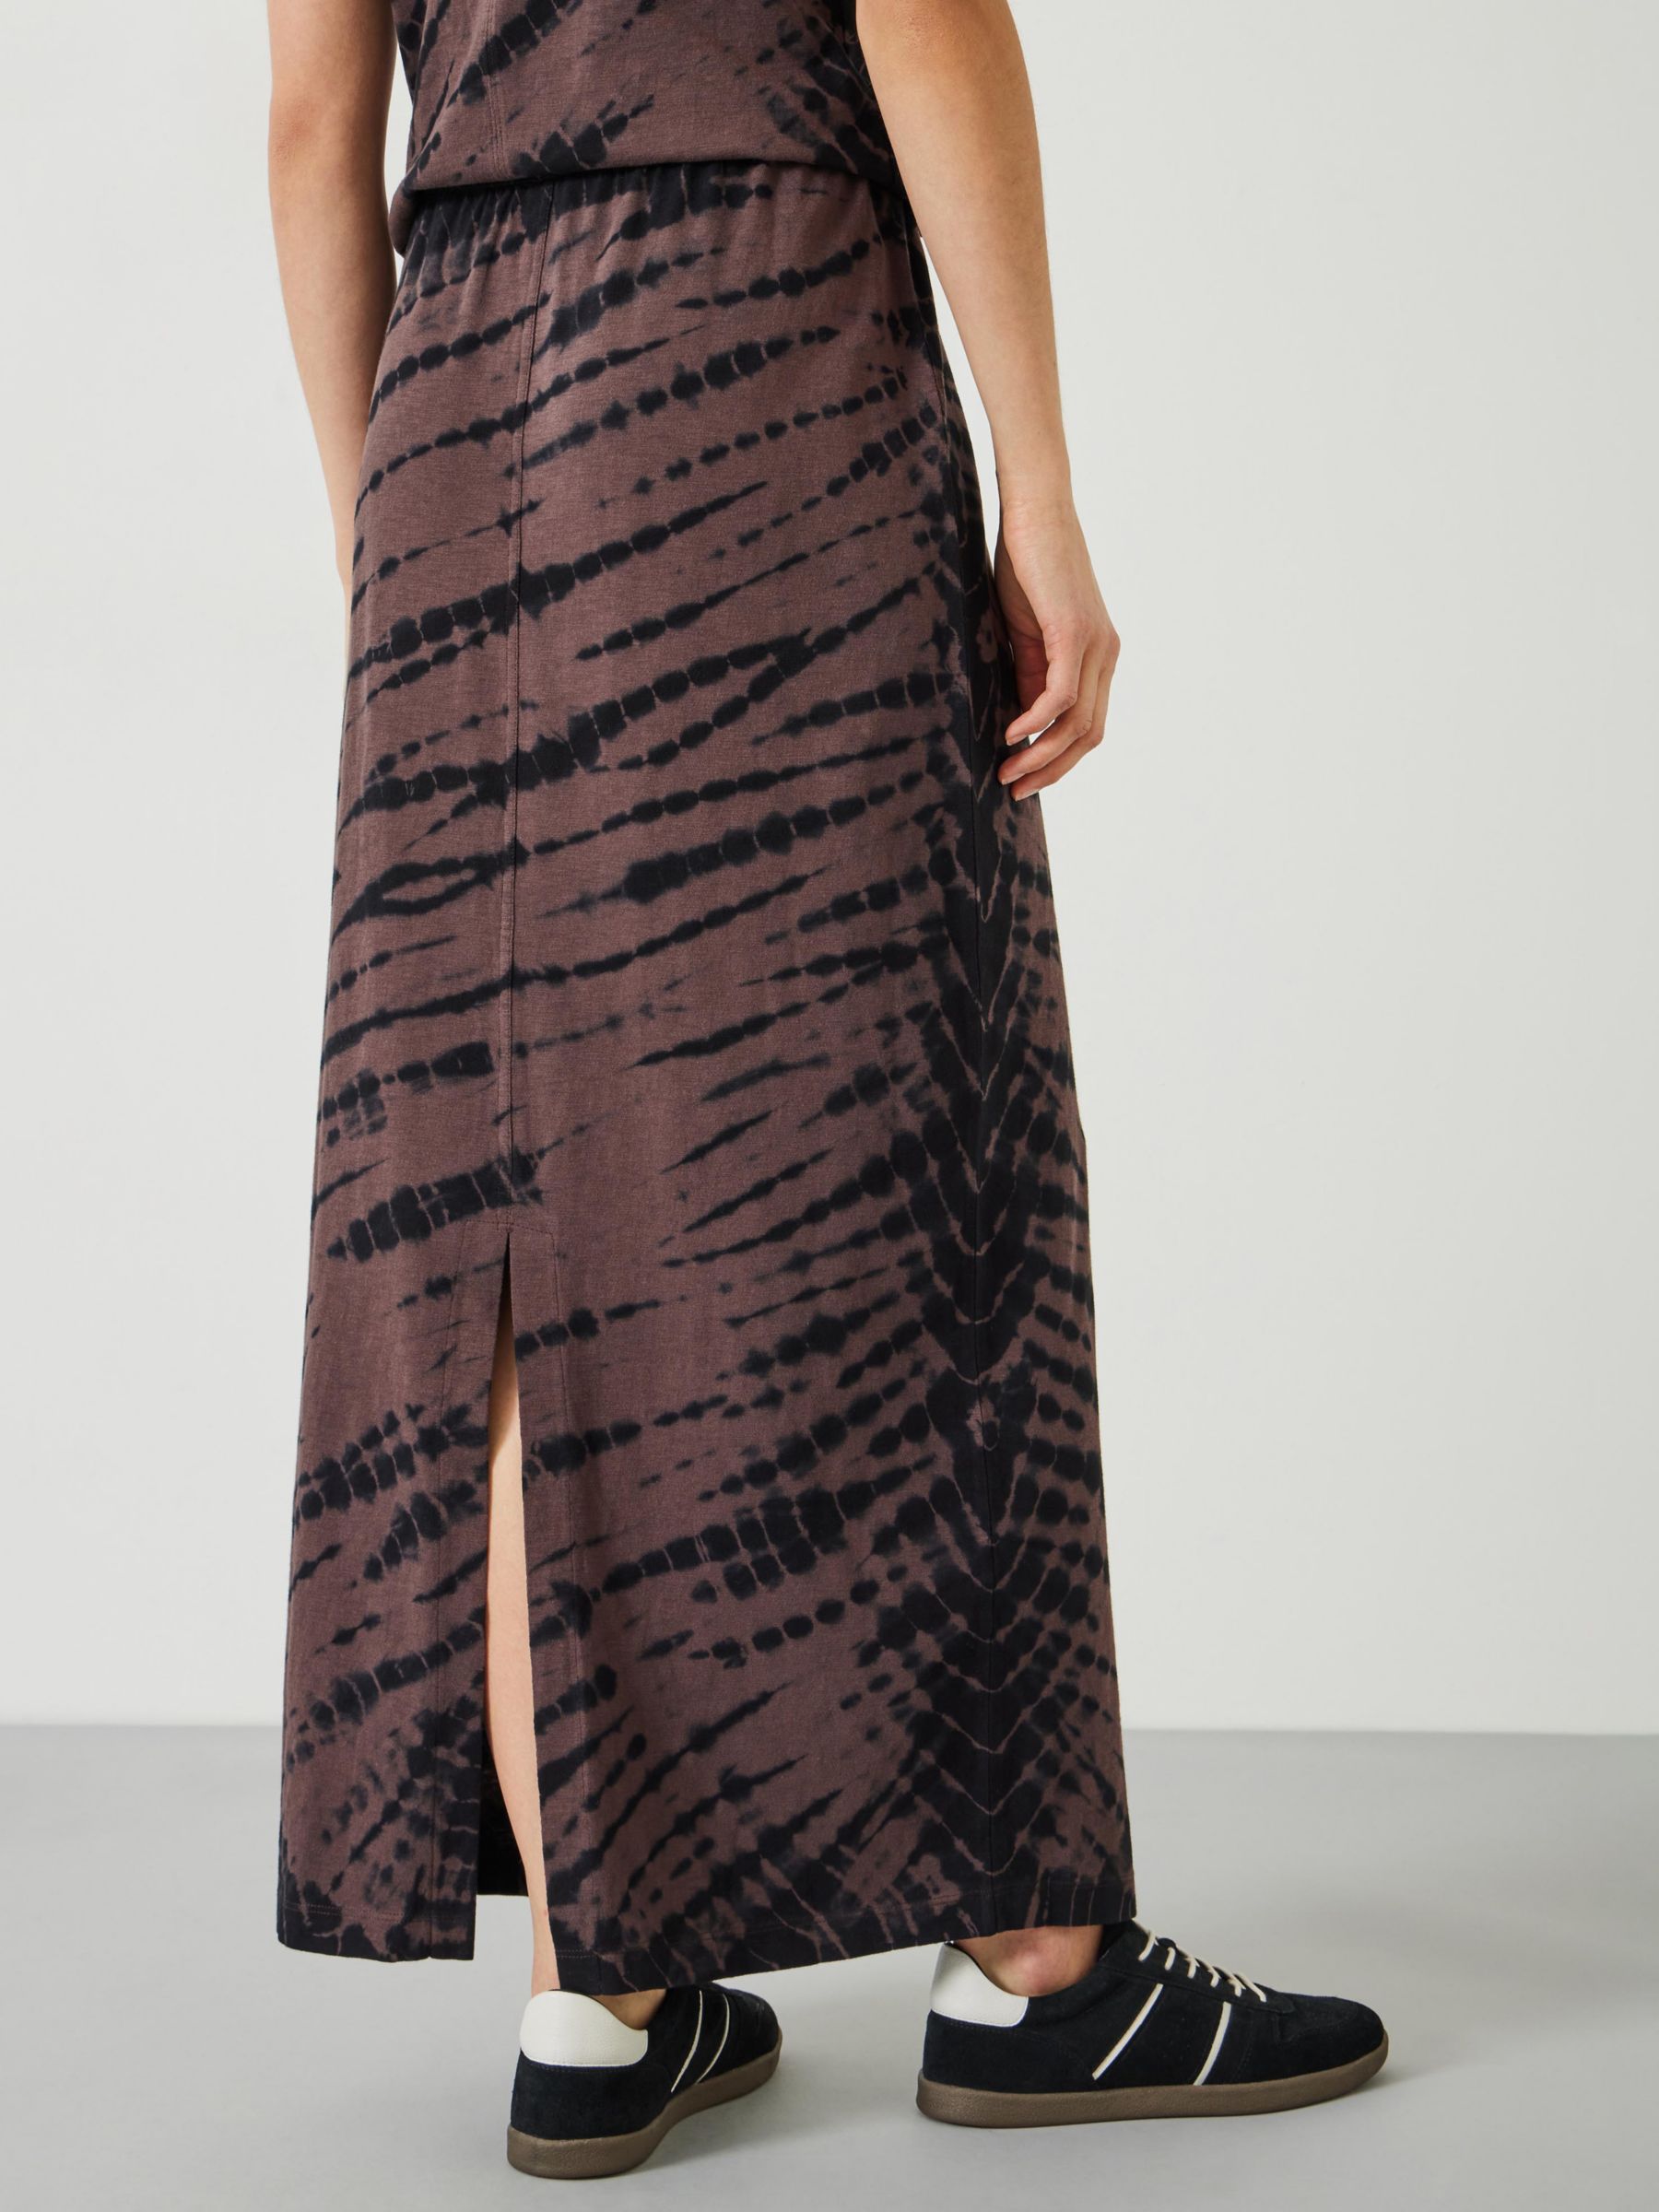 HUSH Zeena Diagonal Tie Dye Maxi Skirt, Brown/Black, 10